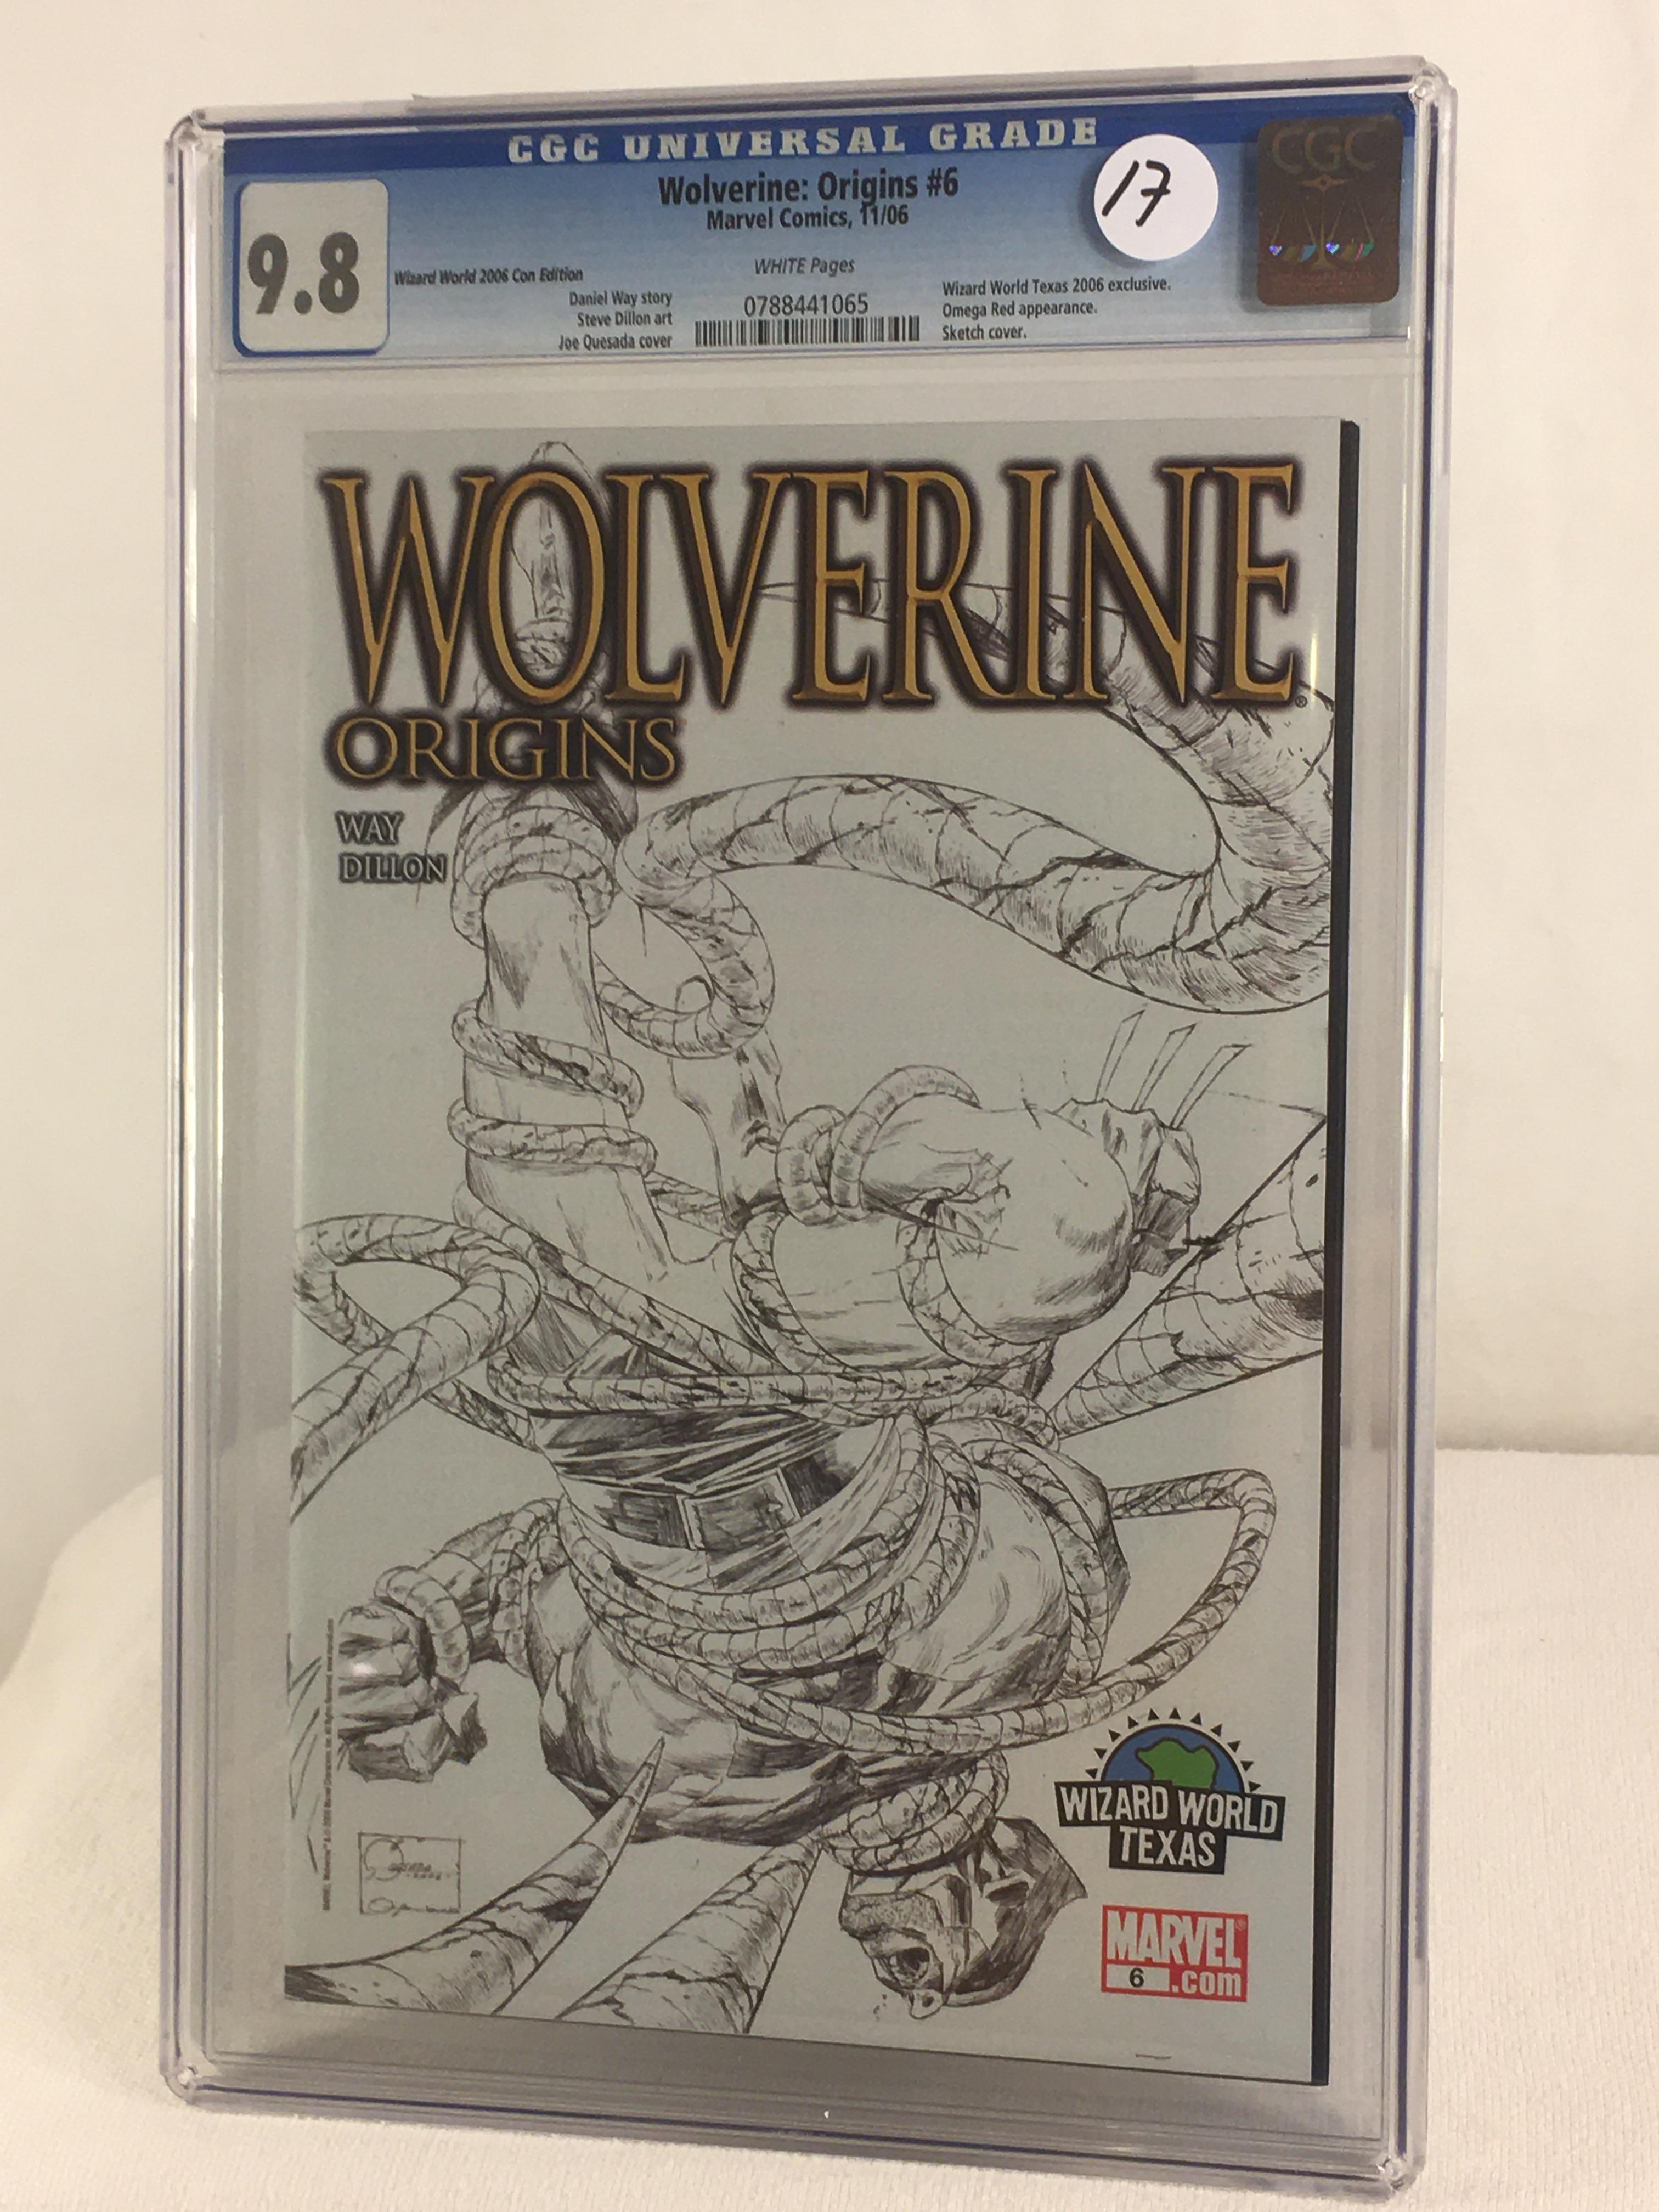 Collector CGC Universal Grade 9.8 Wolverine :Origin #6 Marvel Comics, 11/06